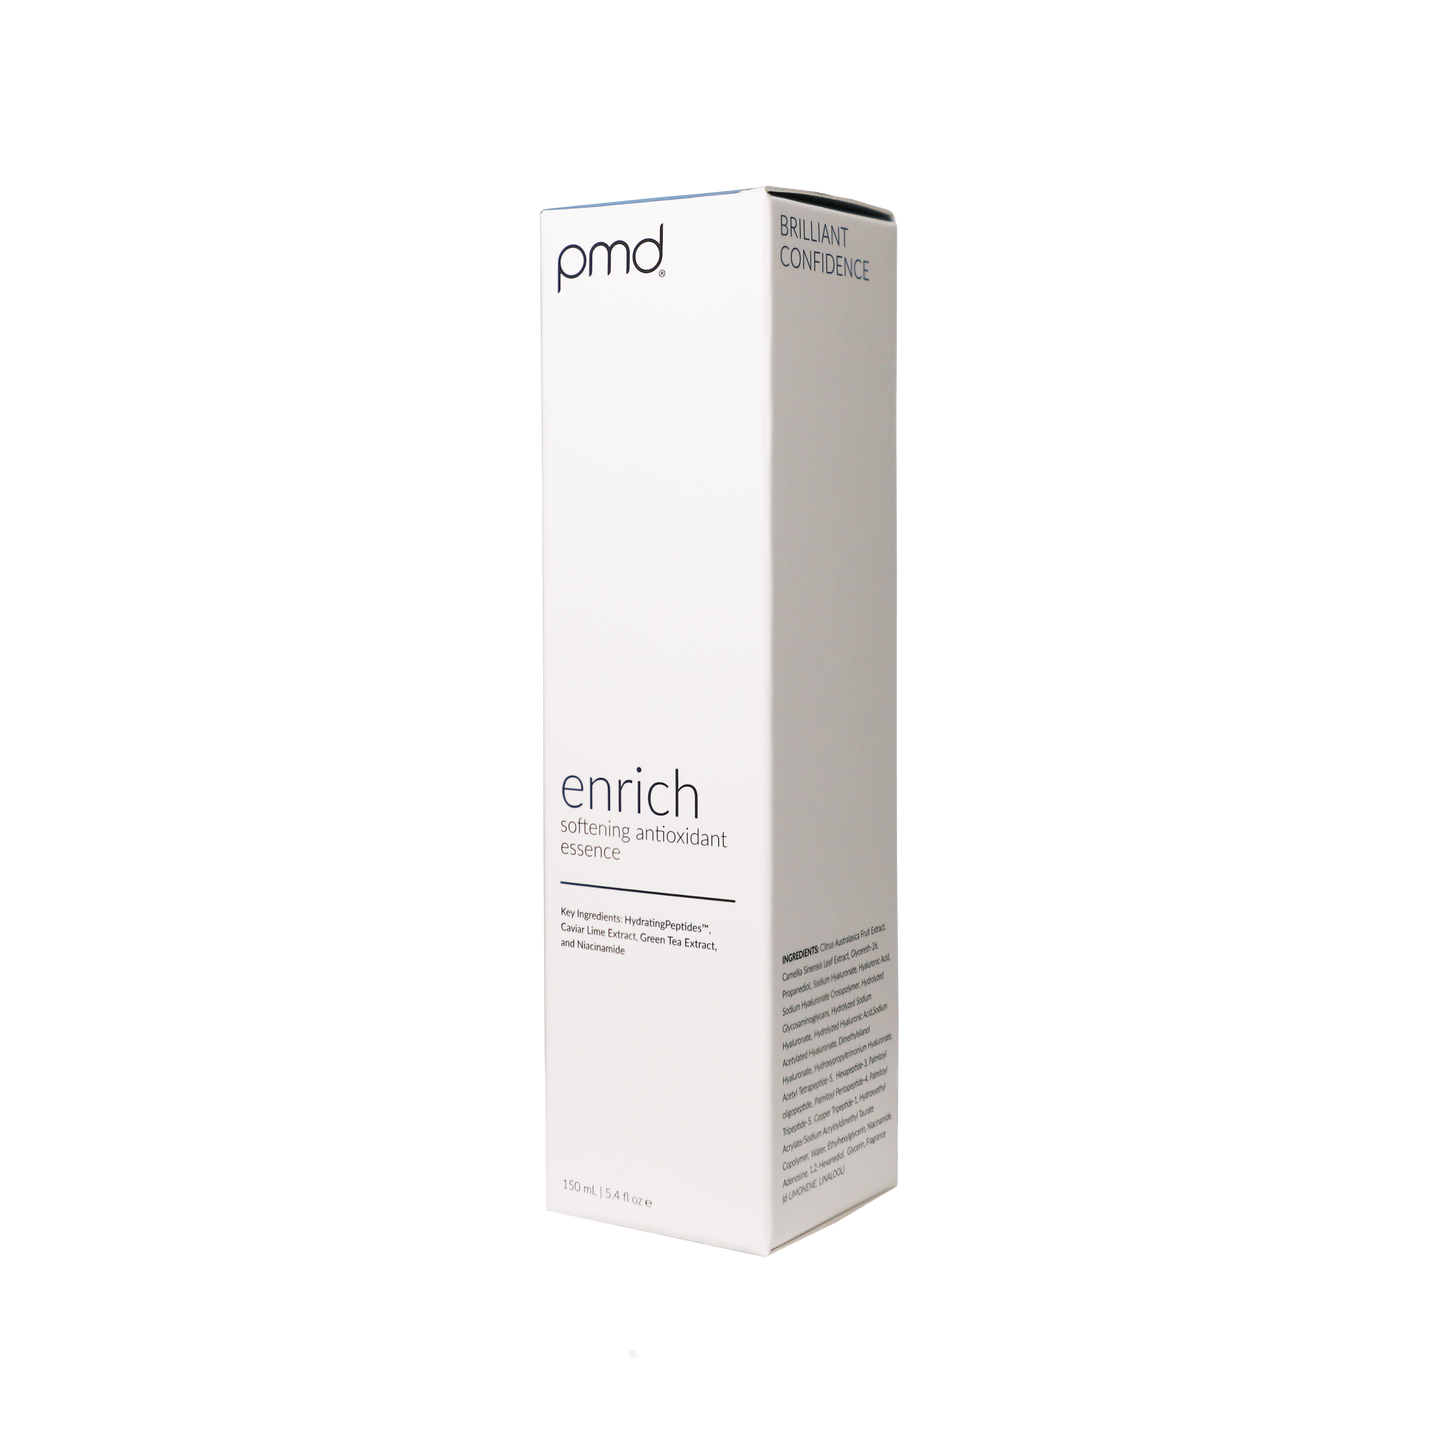 1070-enrich?enrich Softening Antioxidant Essence packaging